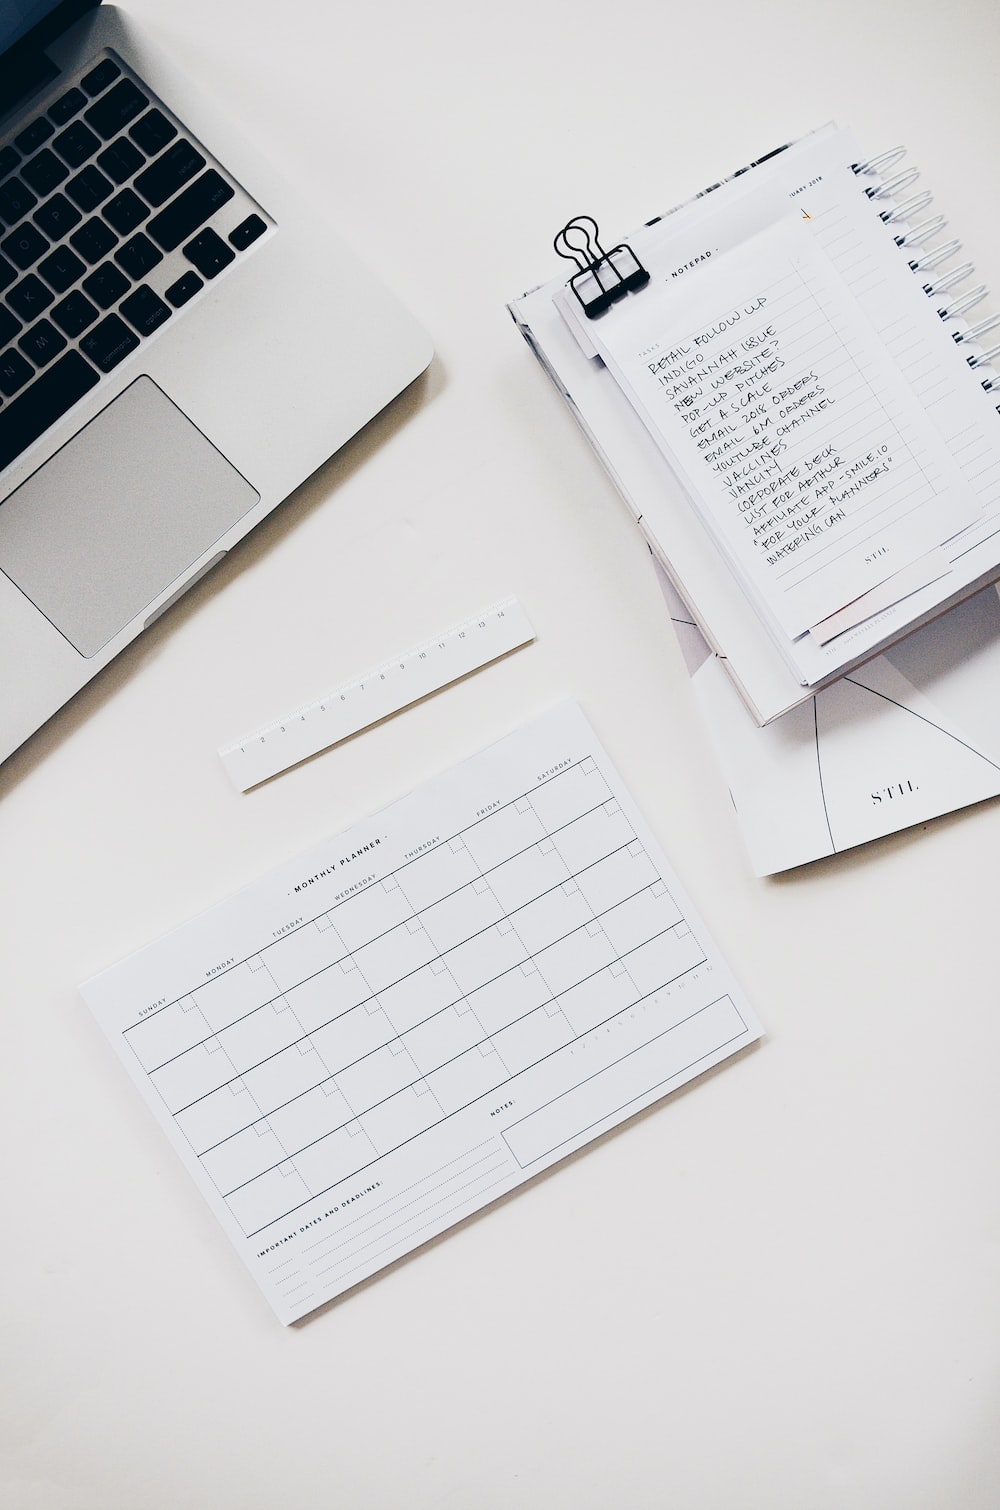 How do you organize your work list?